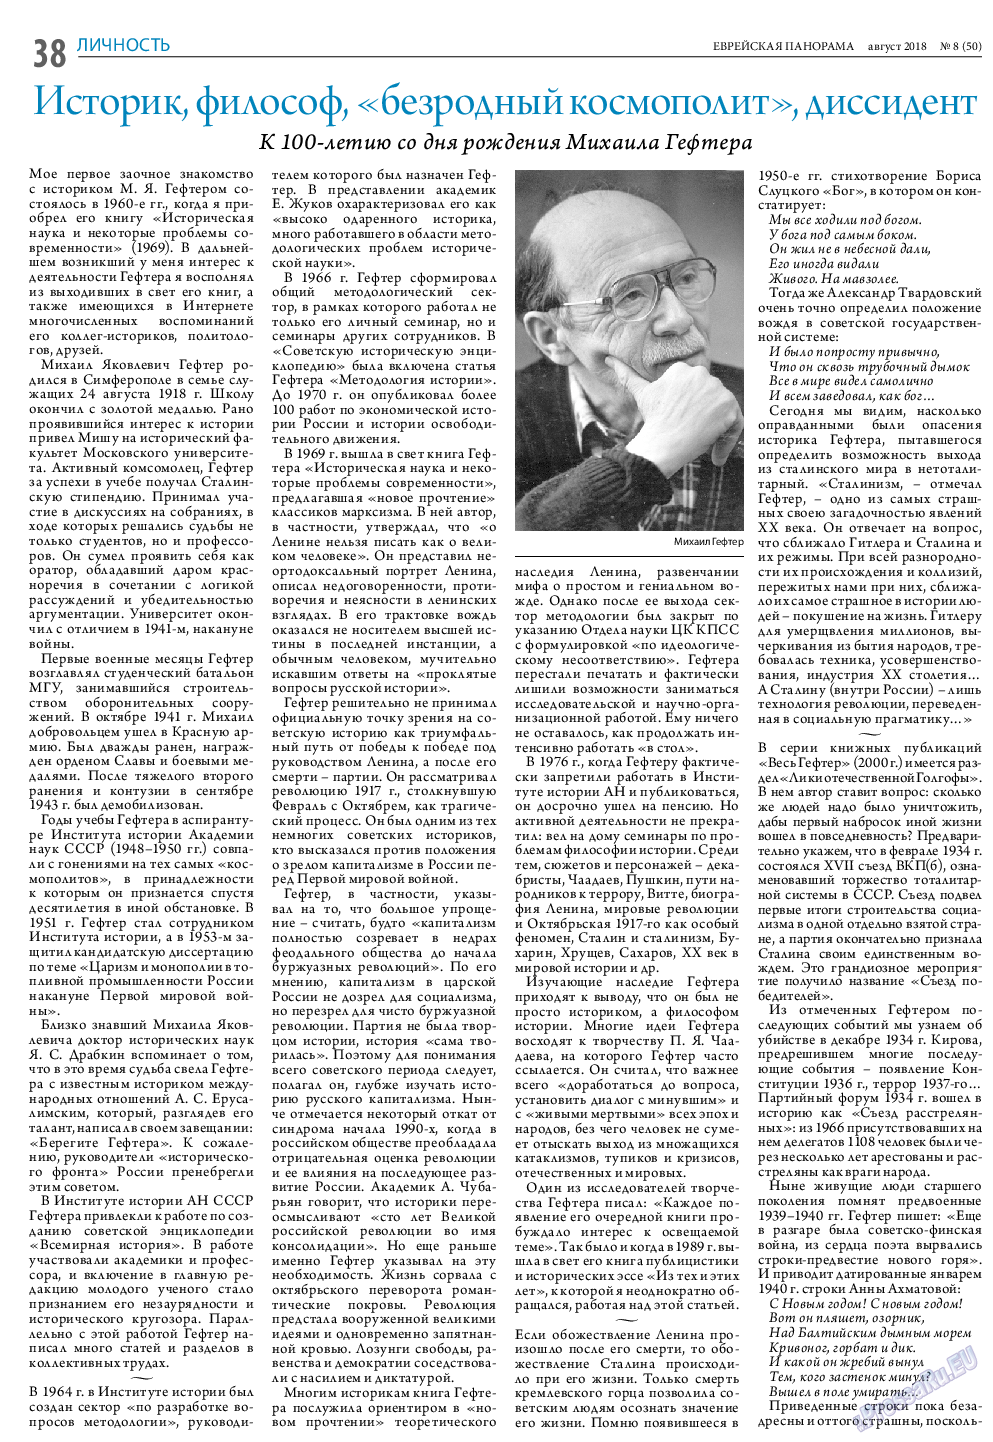 Еврейская панорама, газета. 2018 №8 стр.38